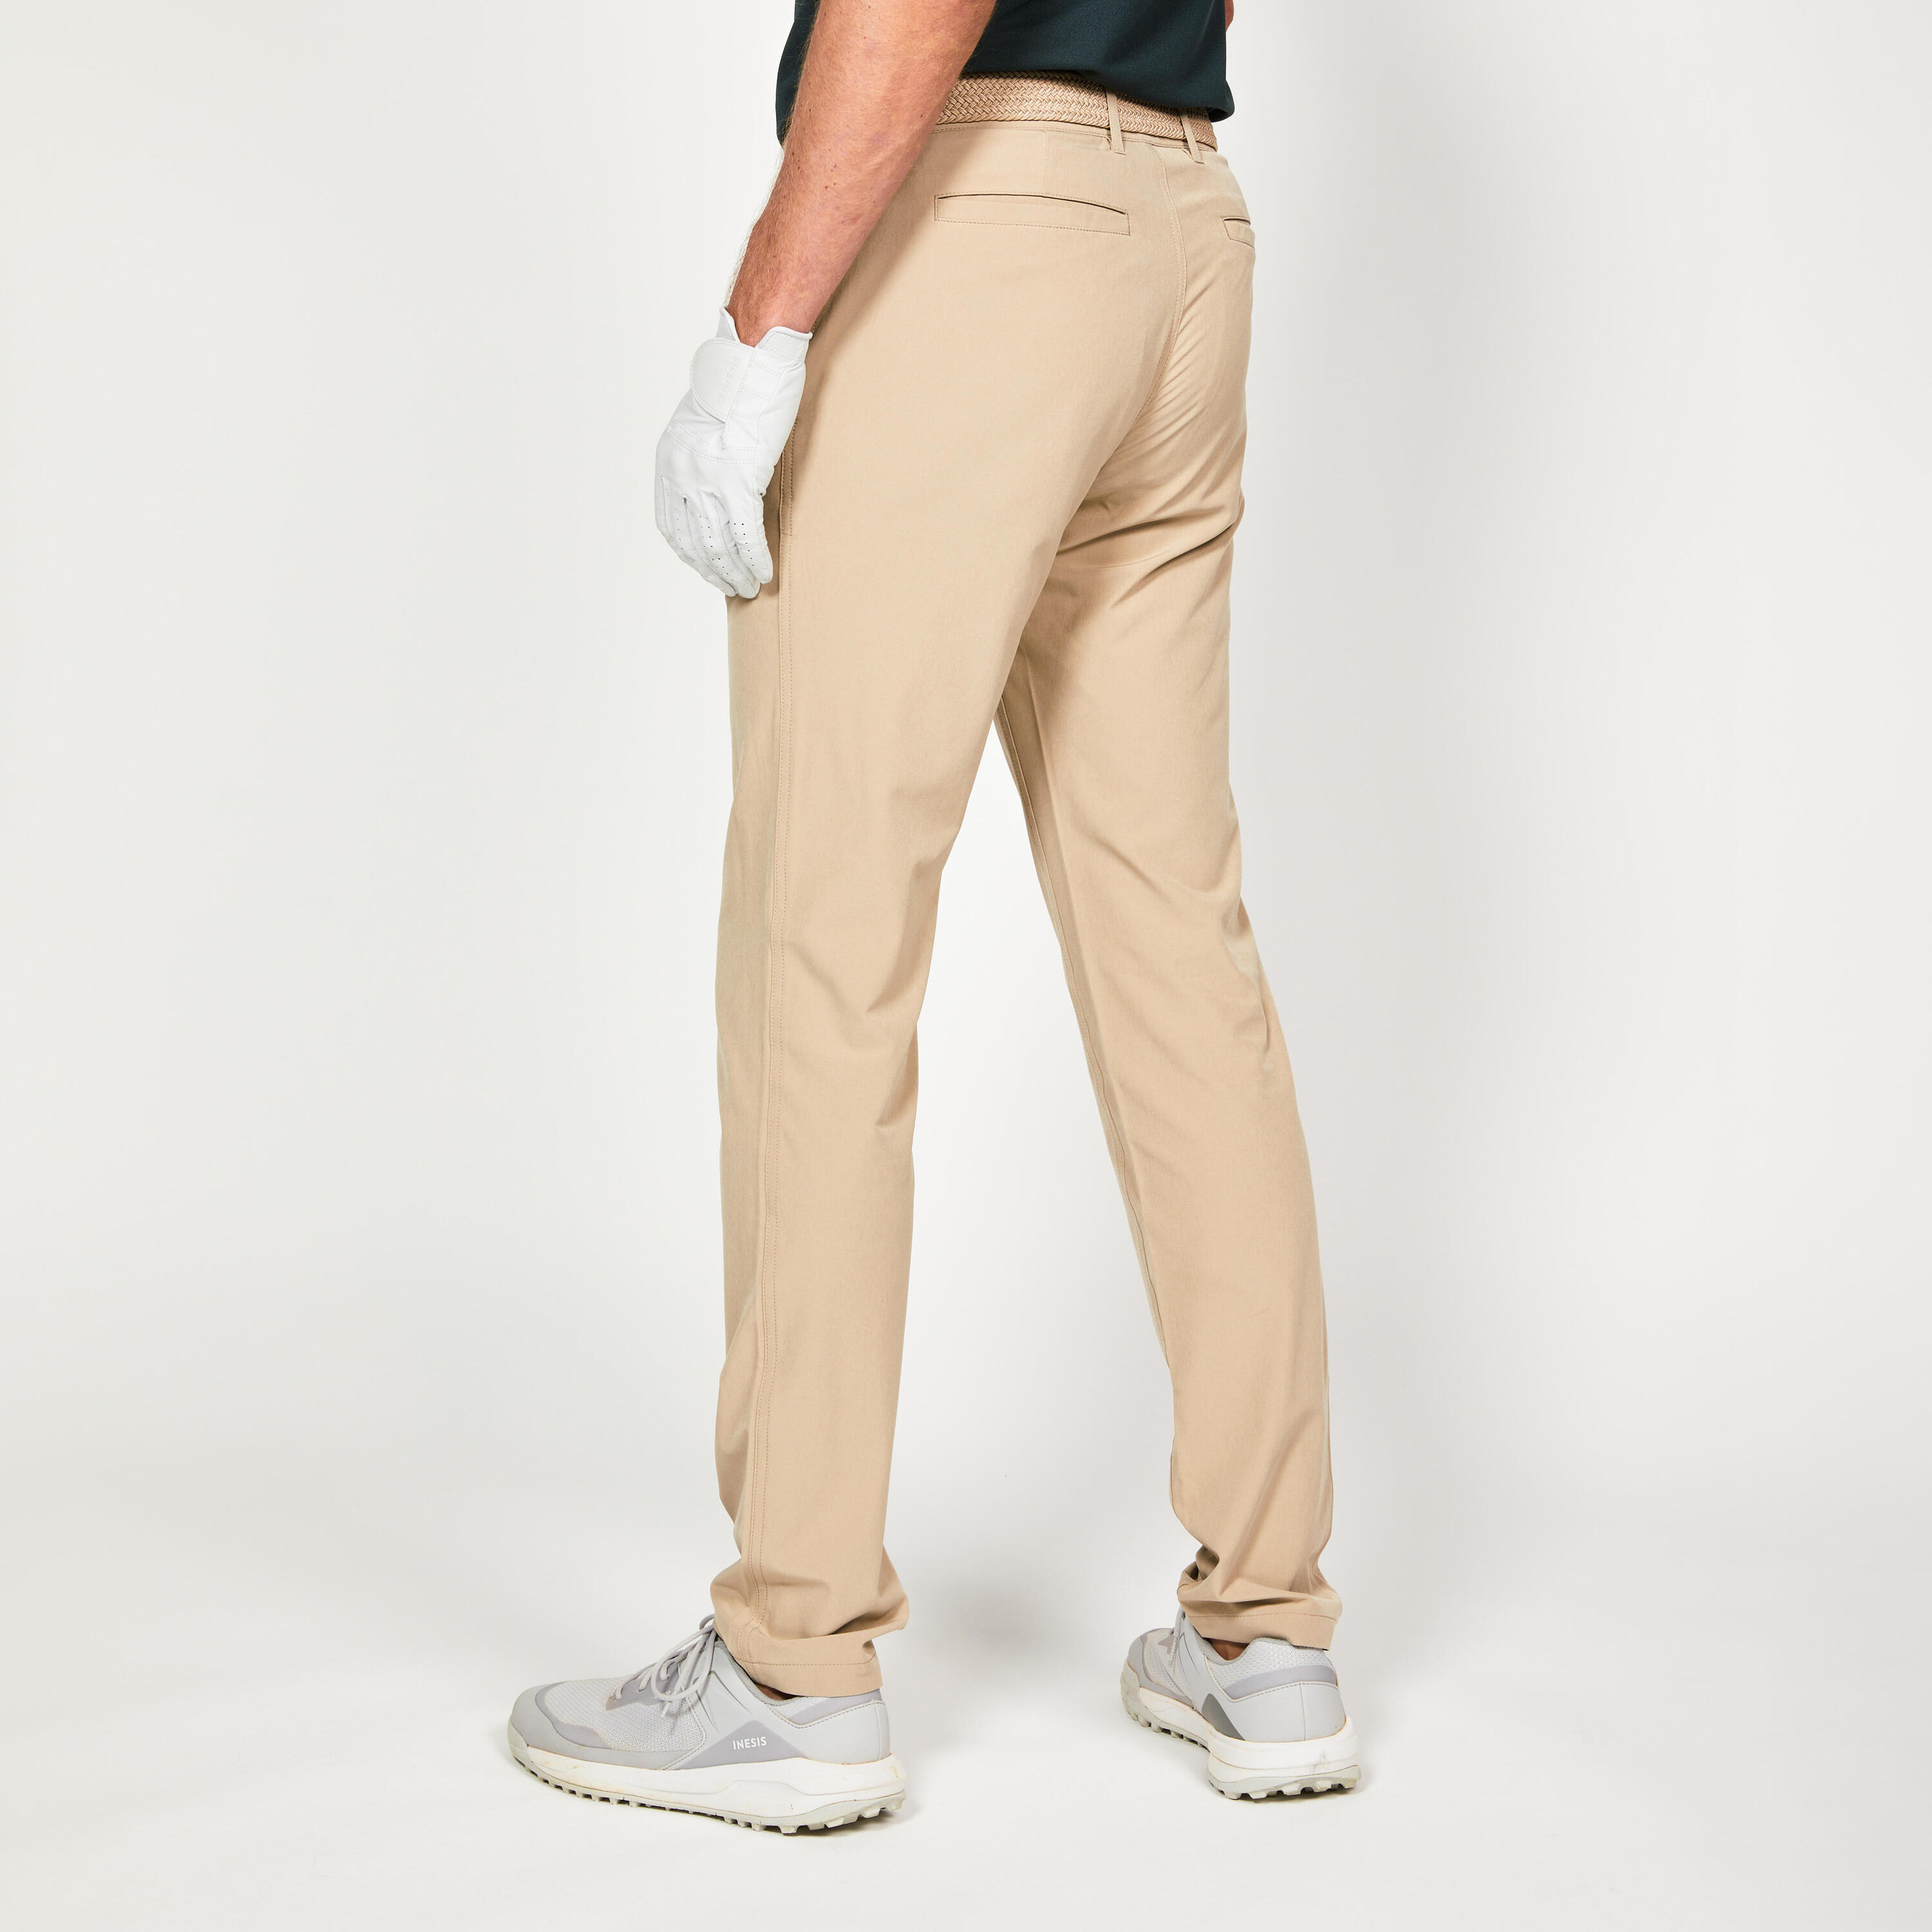 Men's golf trousers - WW 500 dark sand 2/4